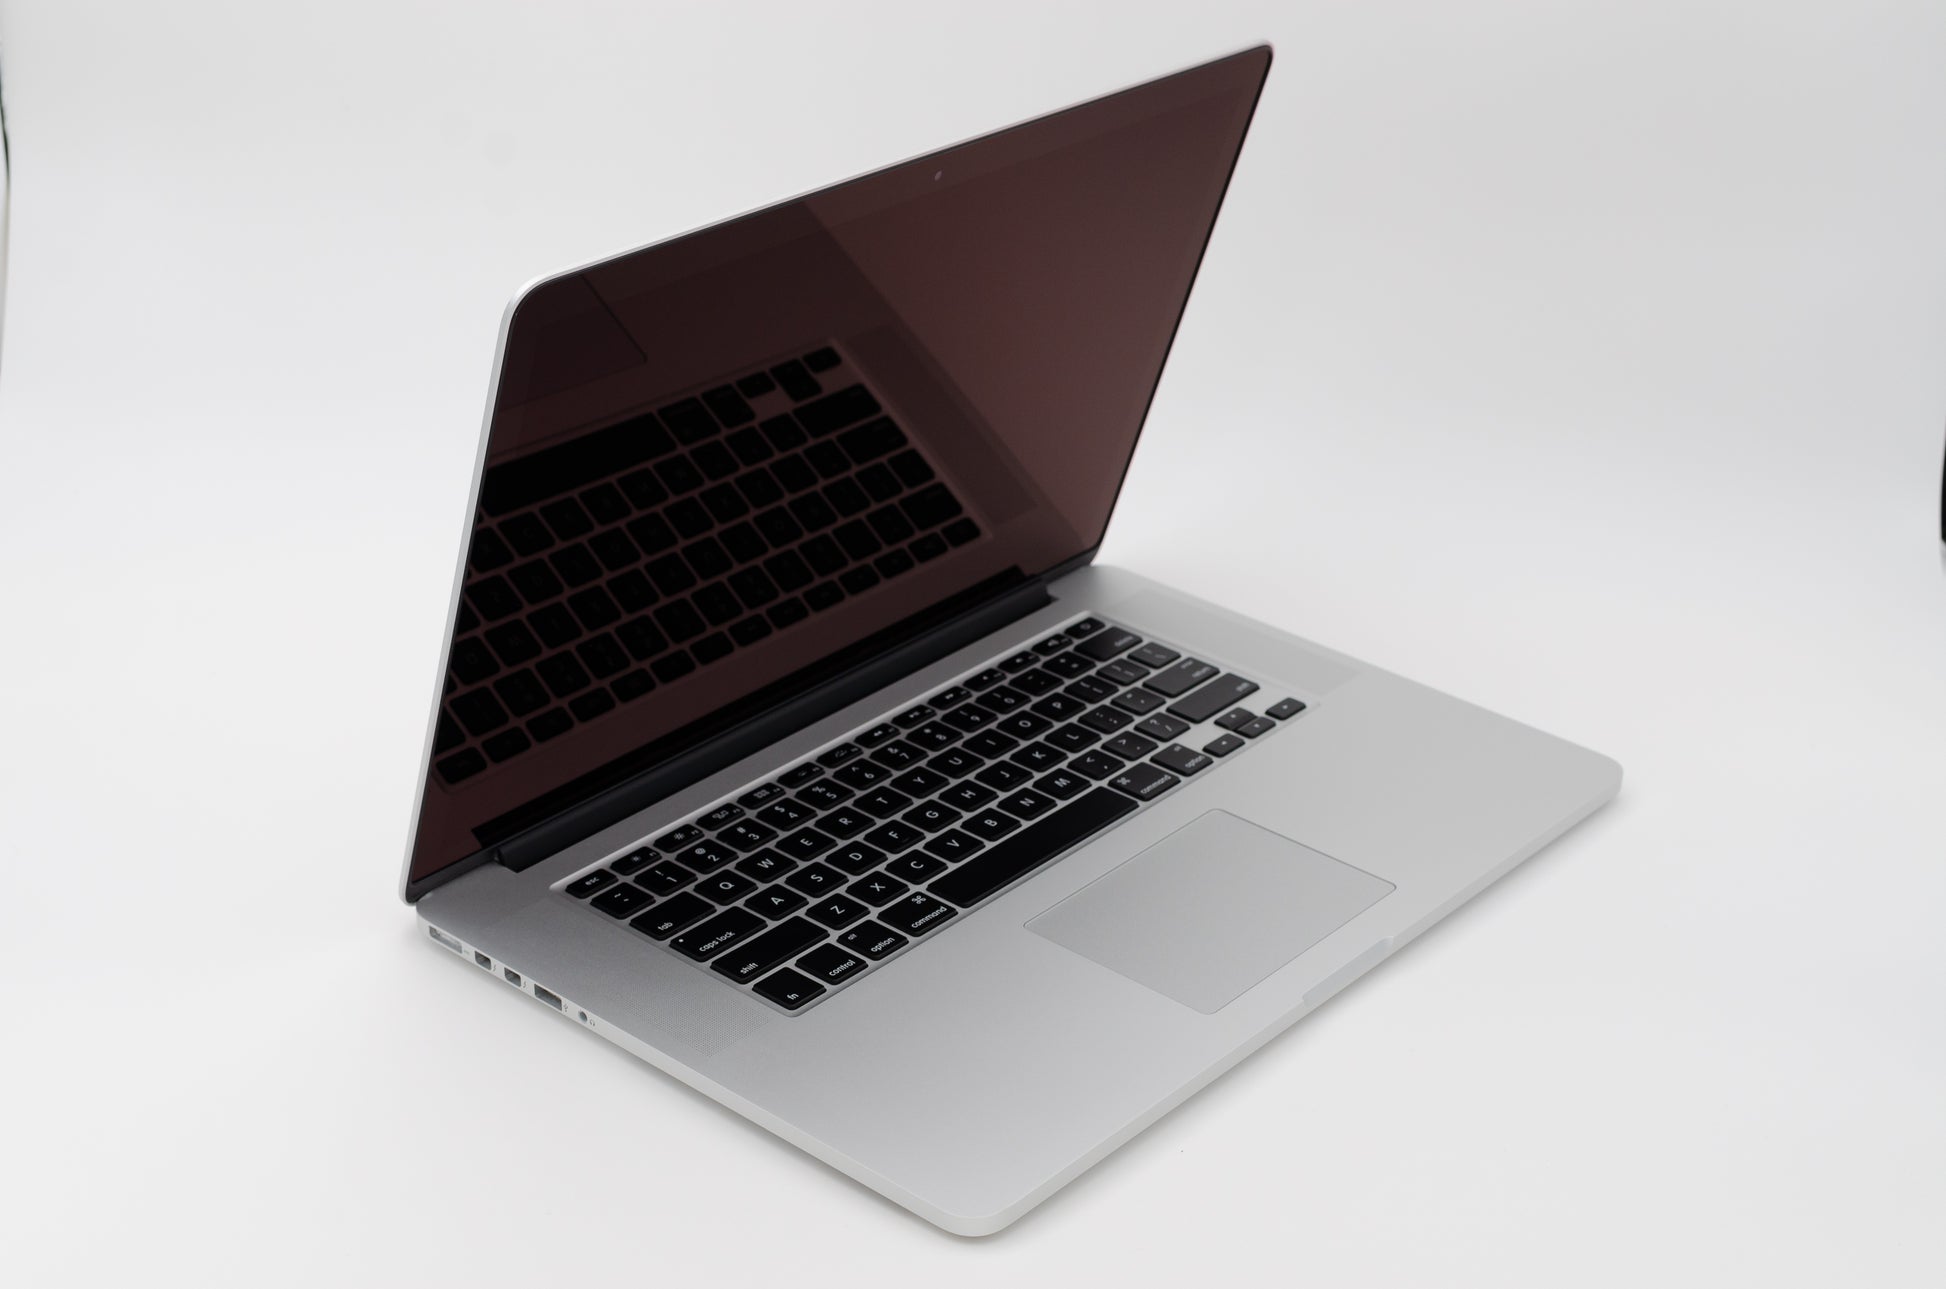 apple-early-2011-15.4-inch-macbook-pro-a1398-aluminum-qci7 - 2.2ghz processor, 4gb ram, hd 6750m - 512mb gpu-mc723ll/a-4